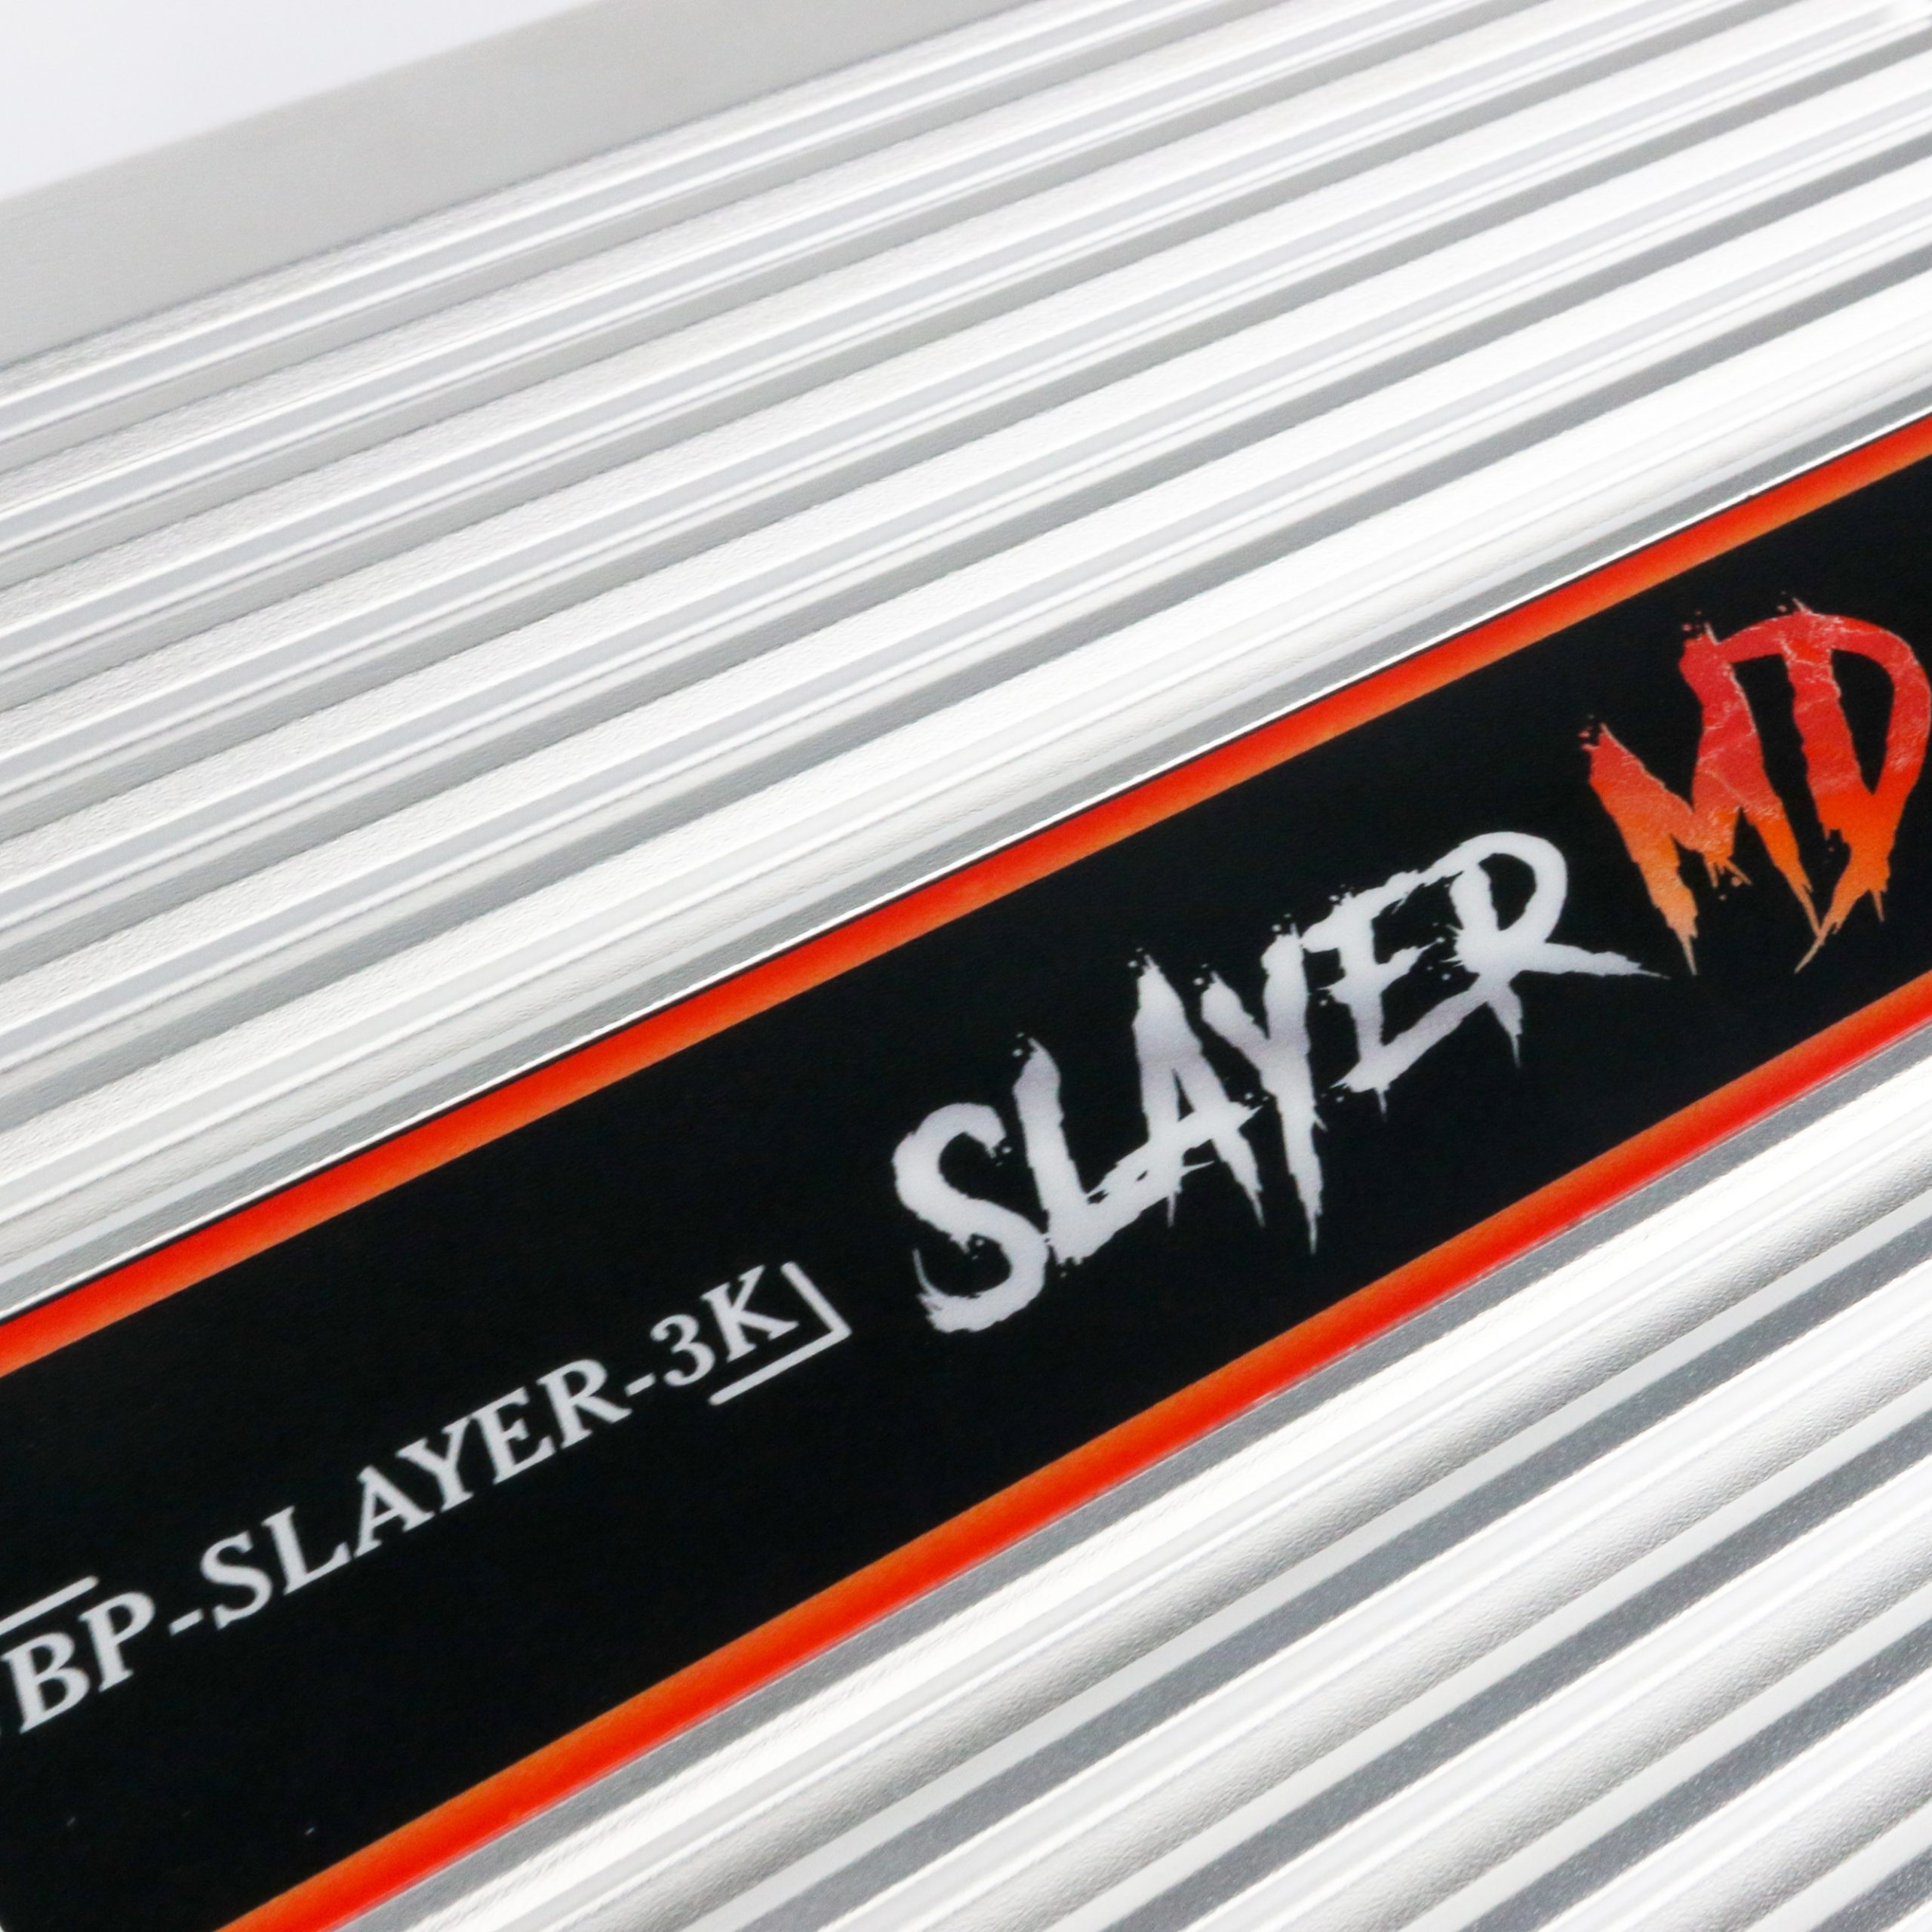 Bp-Slayer-3Kbully-5577-scaled-1.jpg